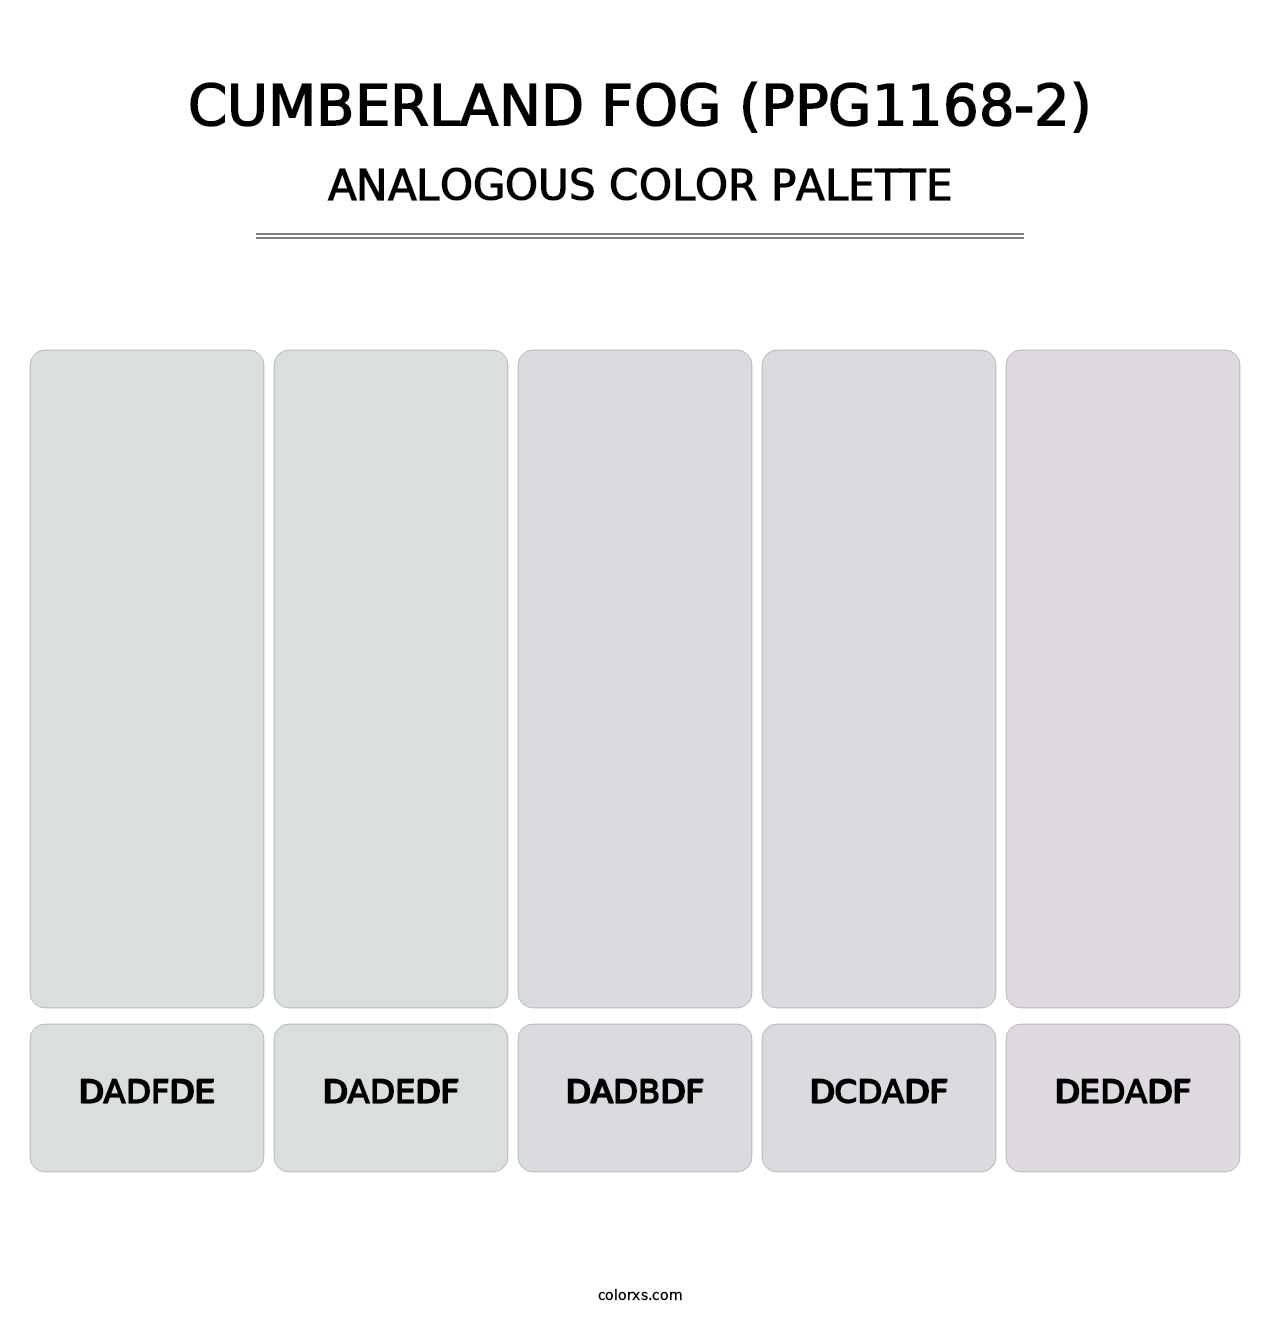 Cumberland Fog (PPG1168-2) - Analogous Color Palette